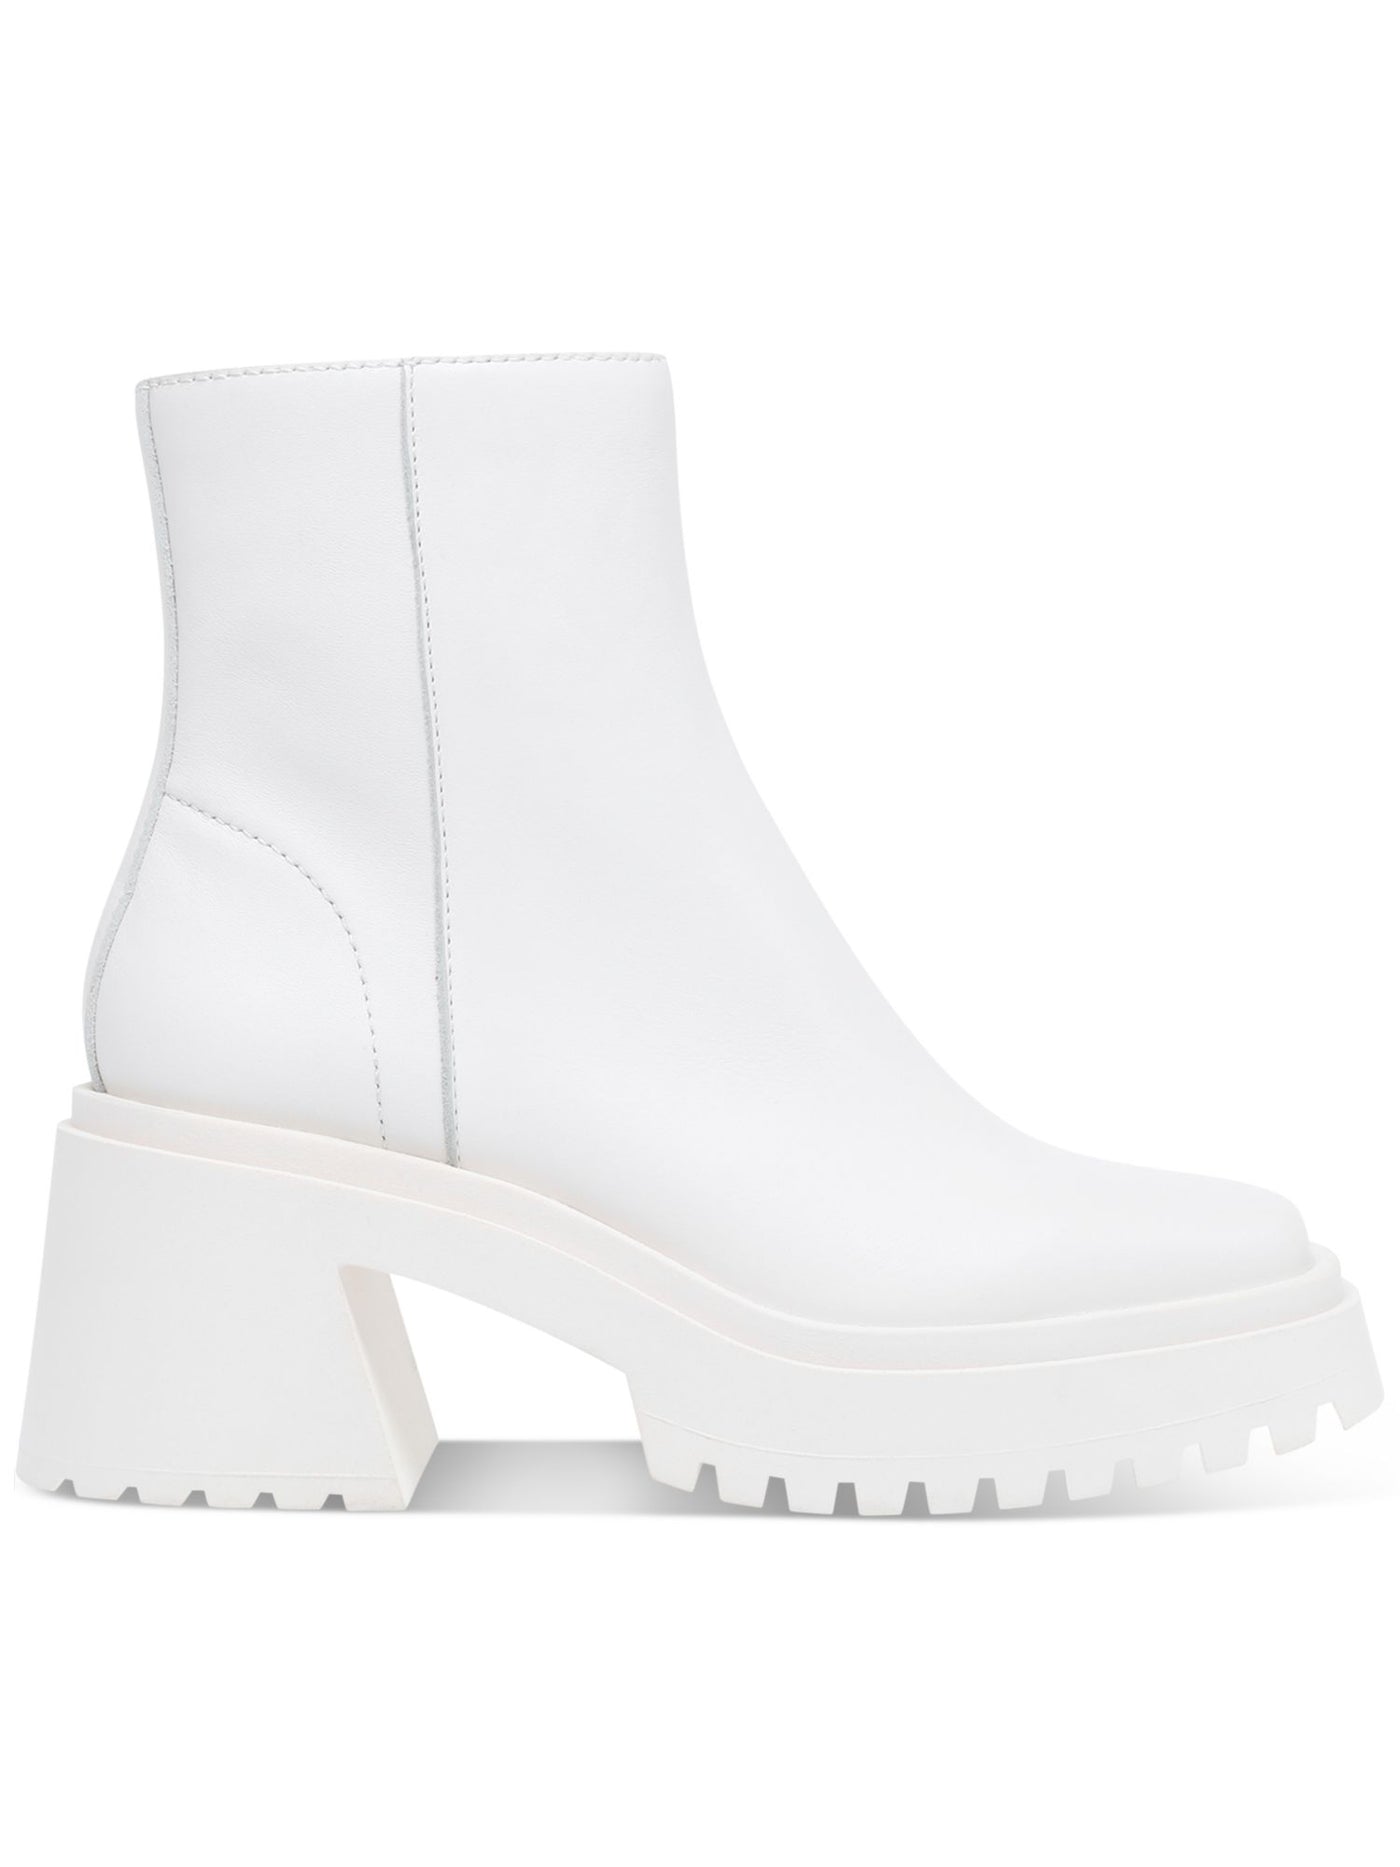 STEVE MADDEN Womens White 1-1/2" Platform Comfort Treaded Fella Square Toe Block Heel Zip-Up Leather Booties 5.5 M